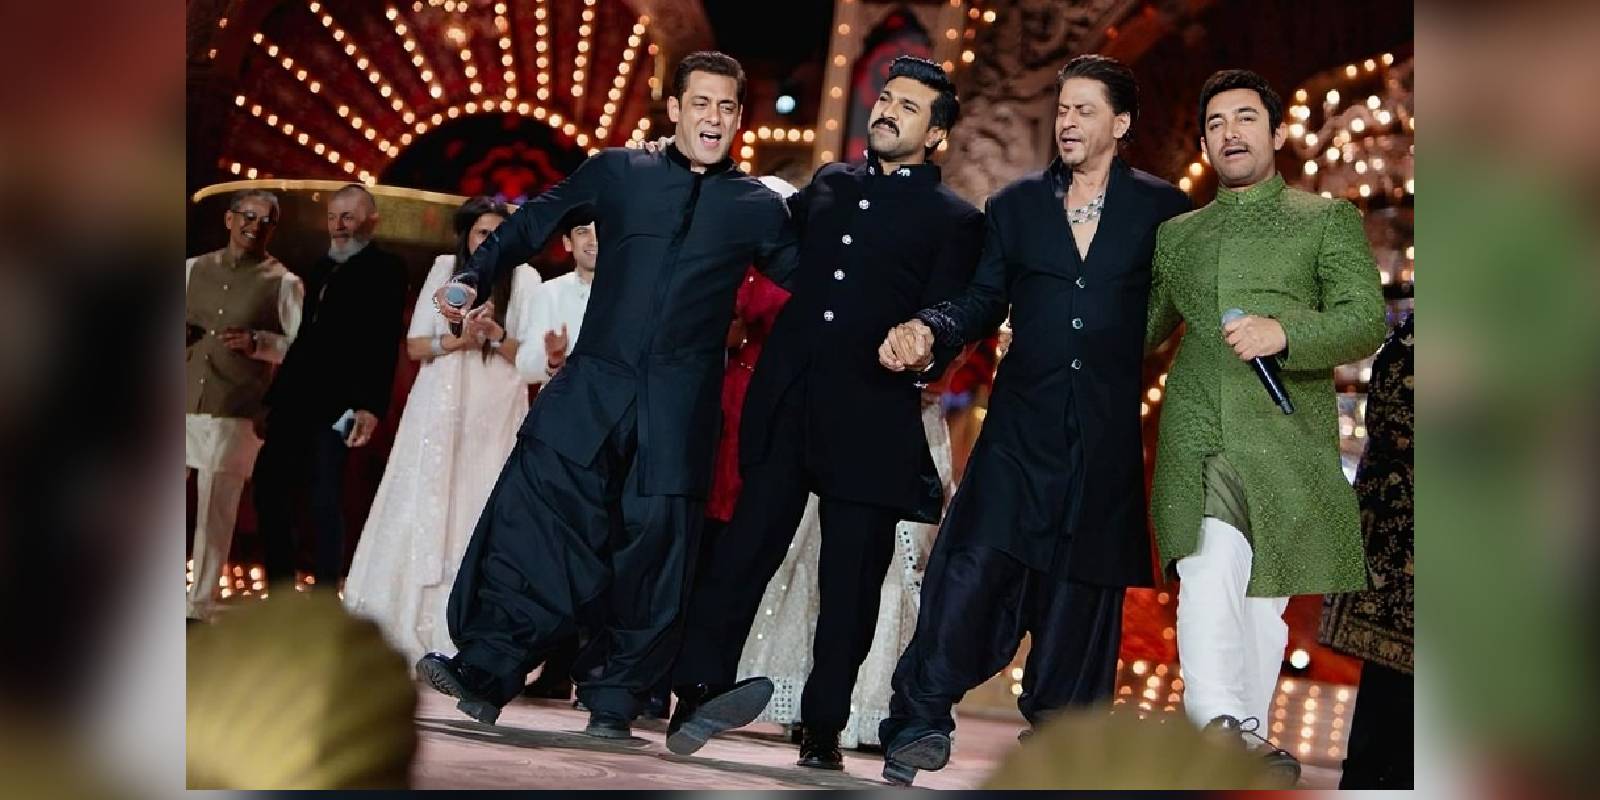 Ram Charan dancing with the three Khans